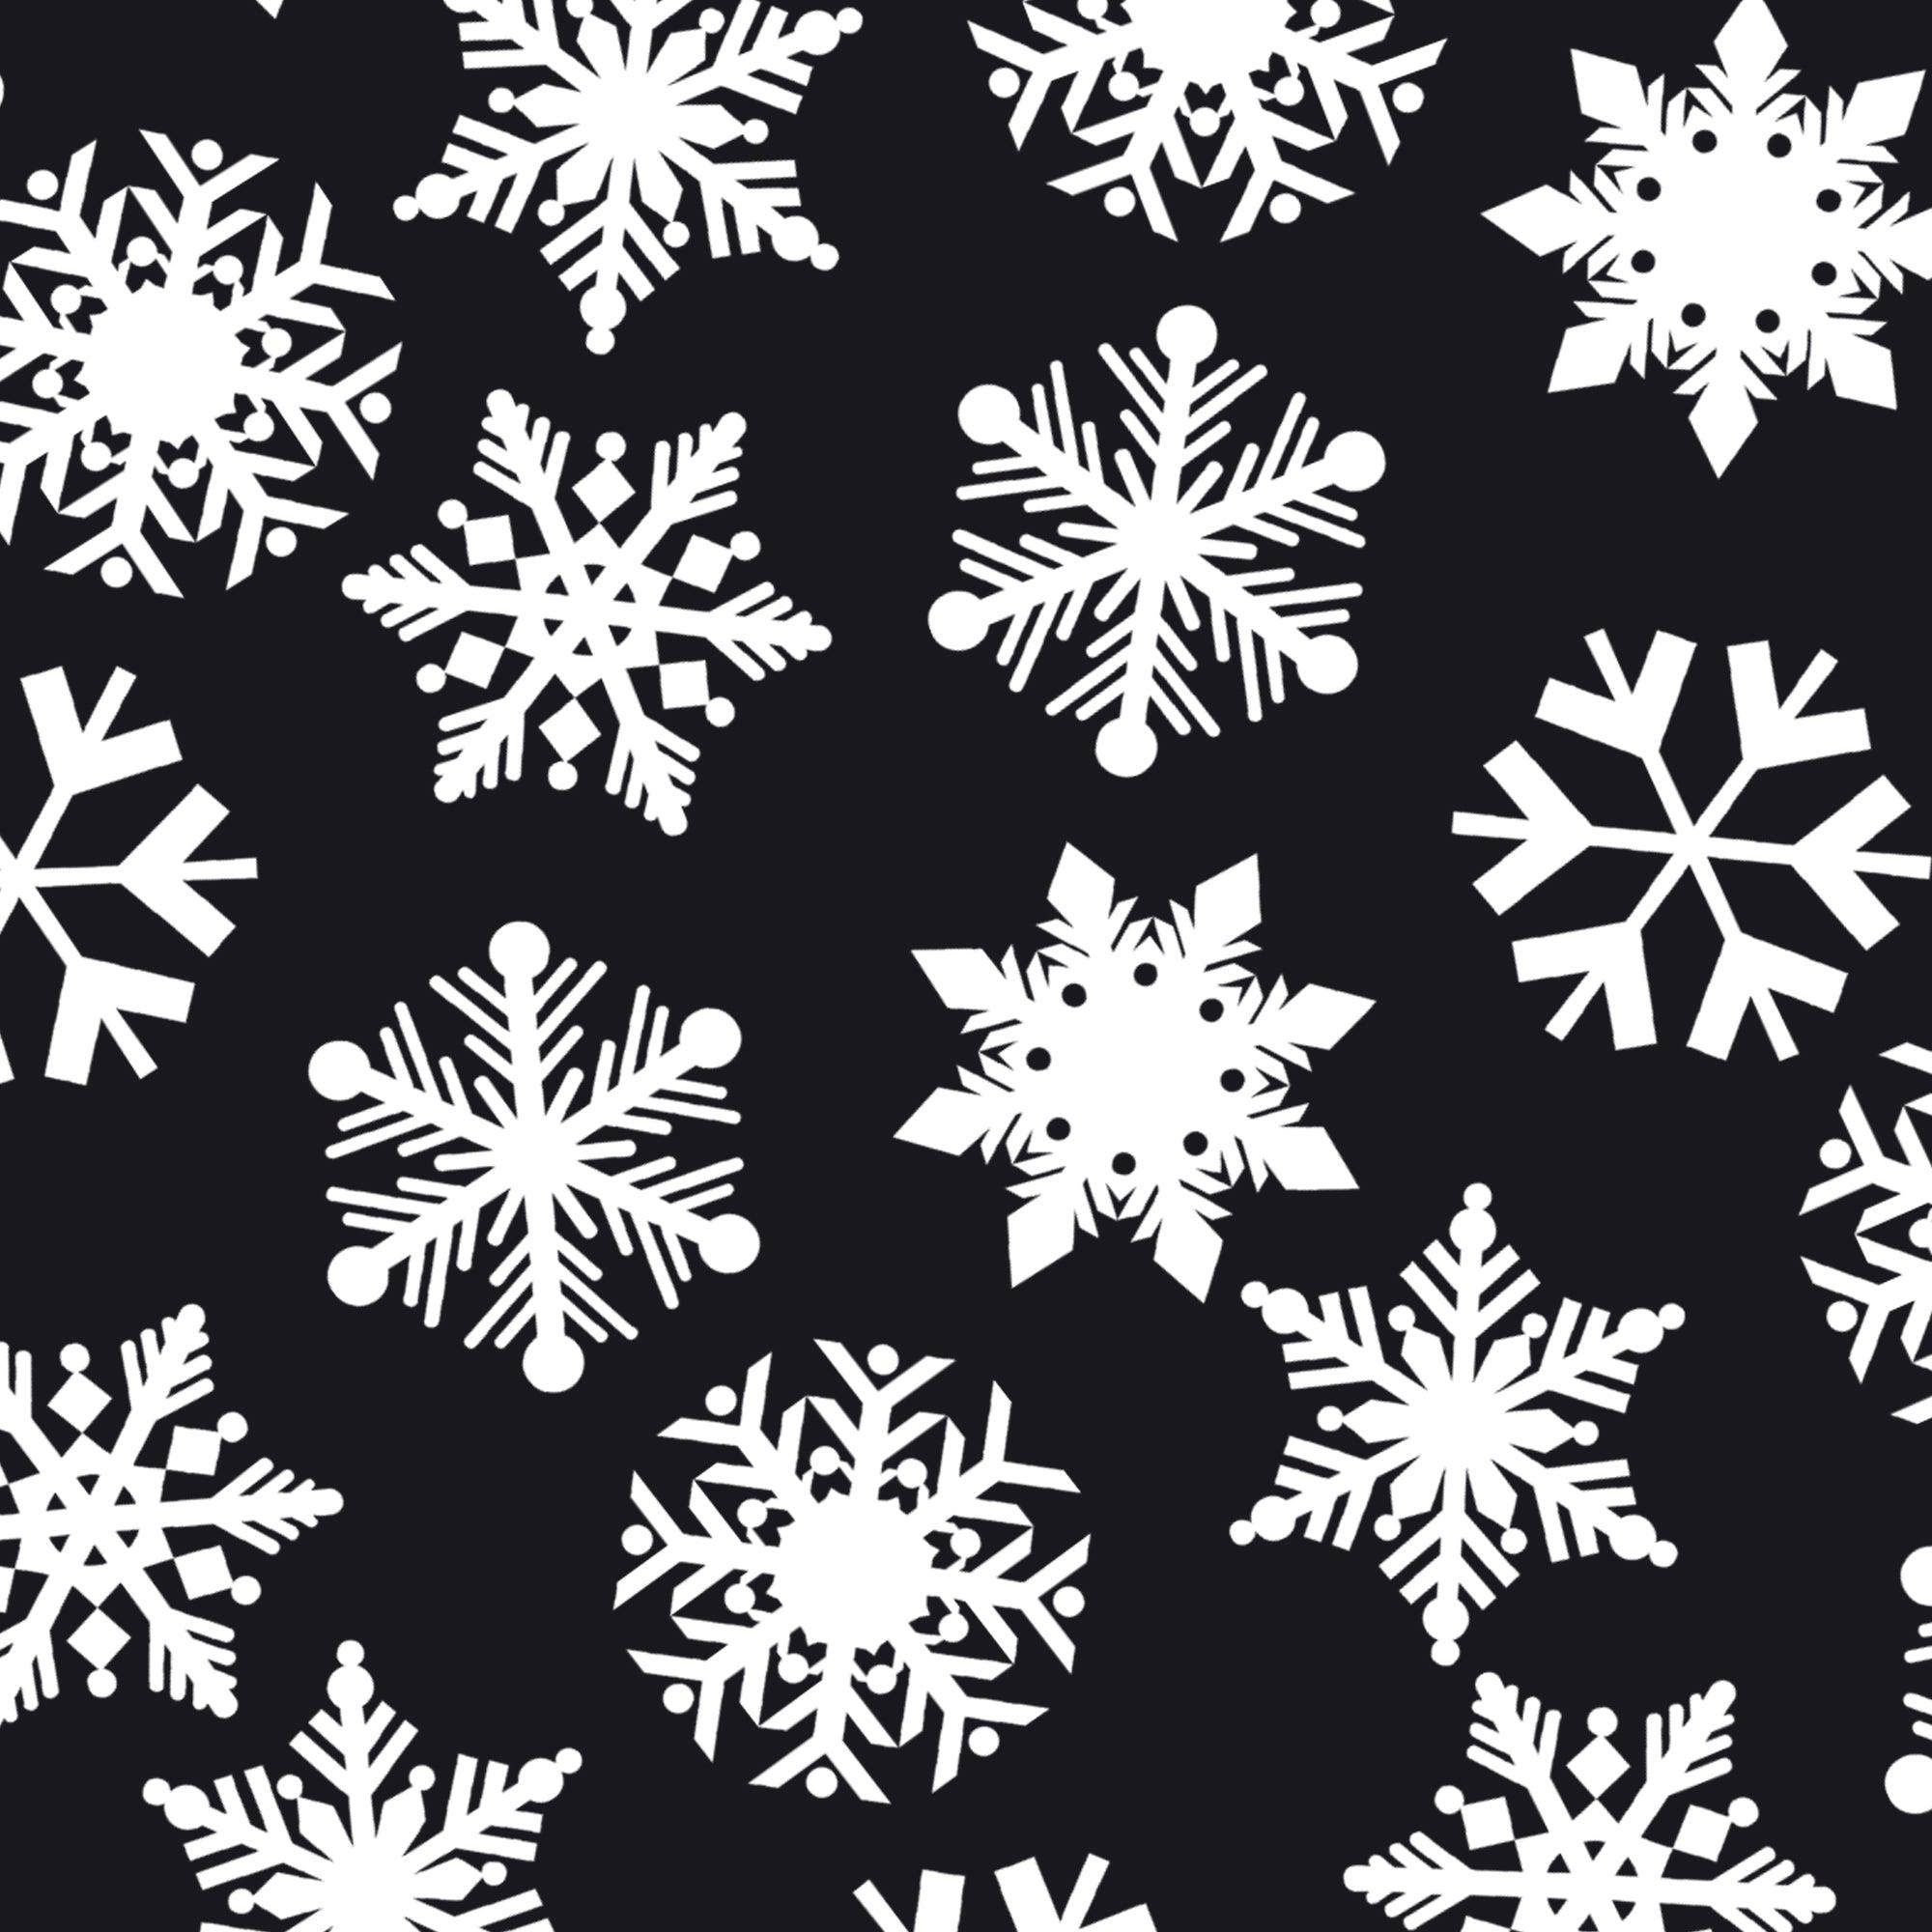 Snowflake Window Stickers: Mega Pack 1 Snowflakes